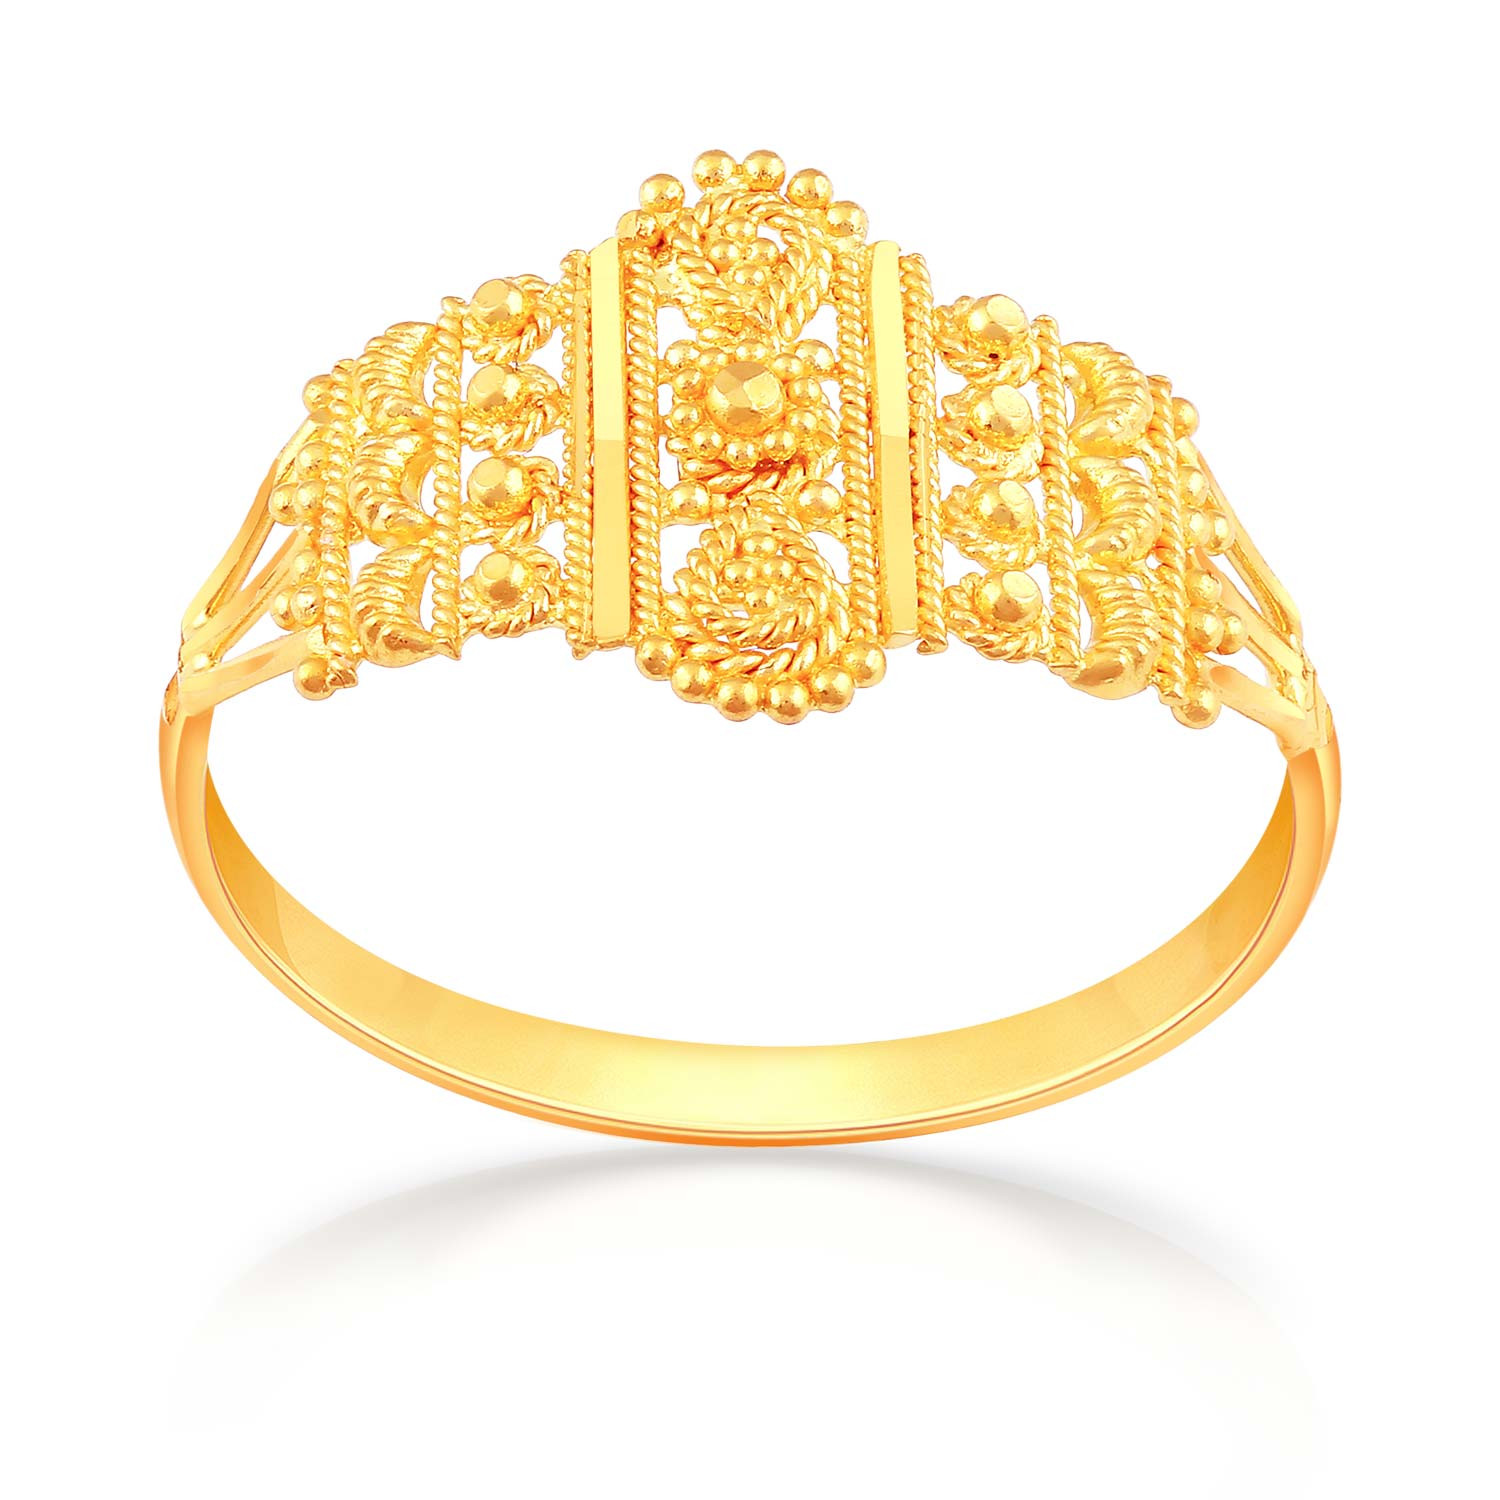 Gold кольца. Кольцо Голд Даймонд. Кольцо Aguia Gold. Женское кольцо корона золото. Золотое кольцо без фона.